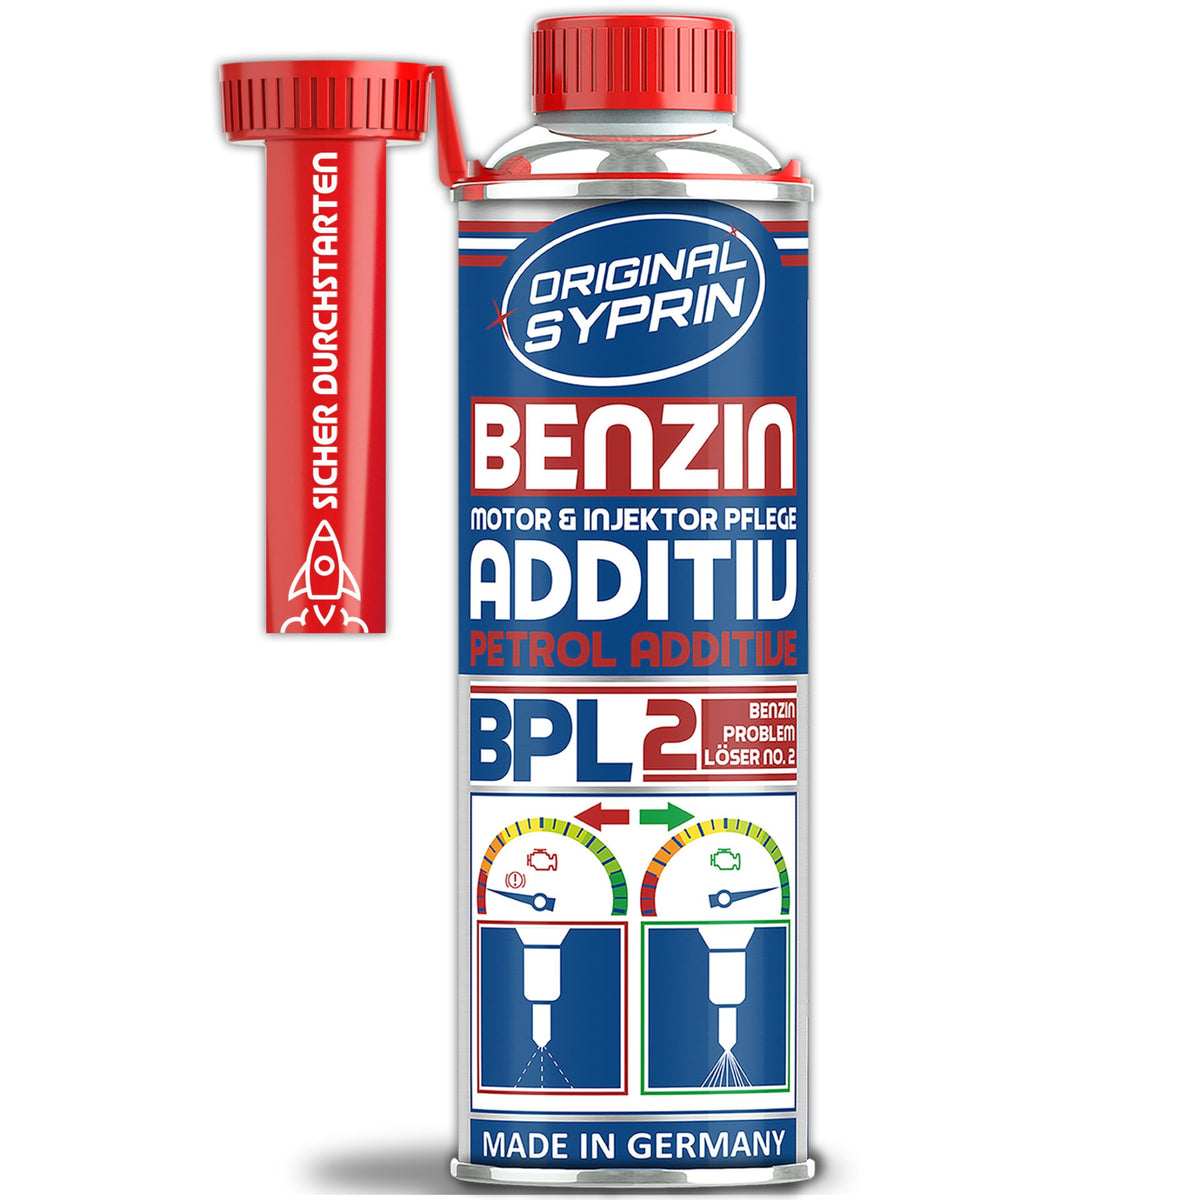 Syprin Benzin Injektor & Ventil Pflege Additiv BPL2